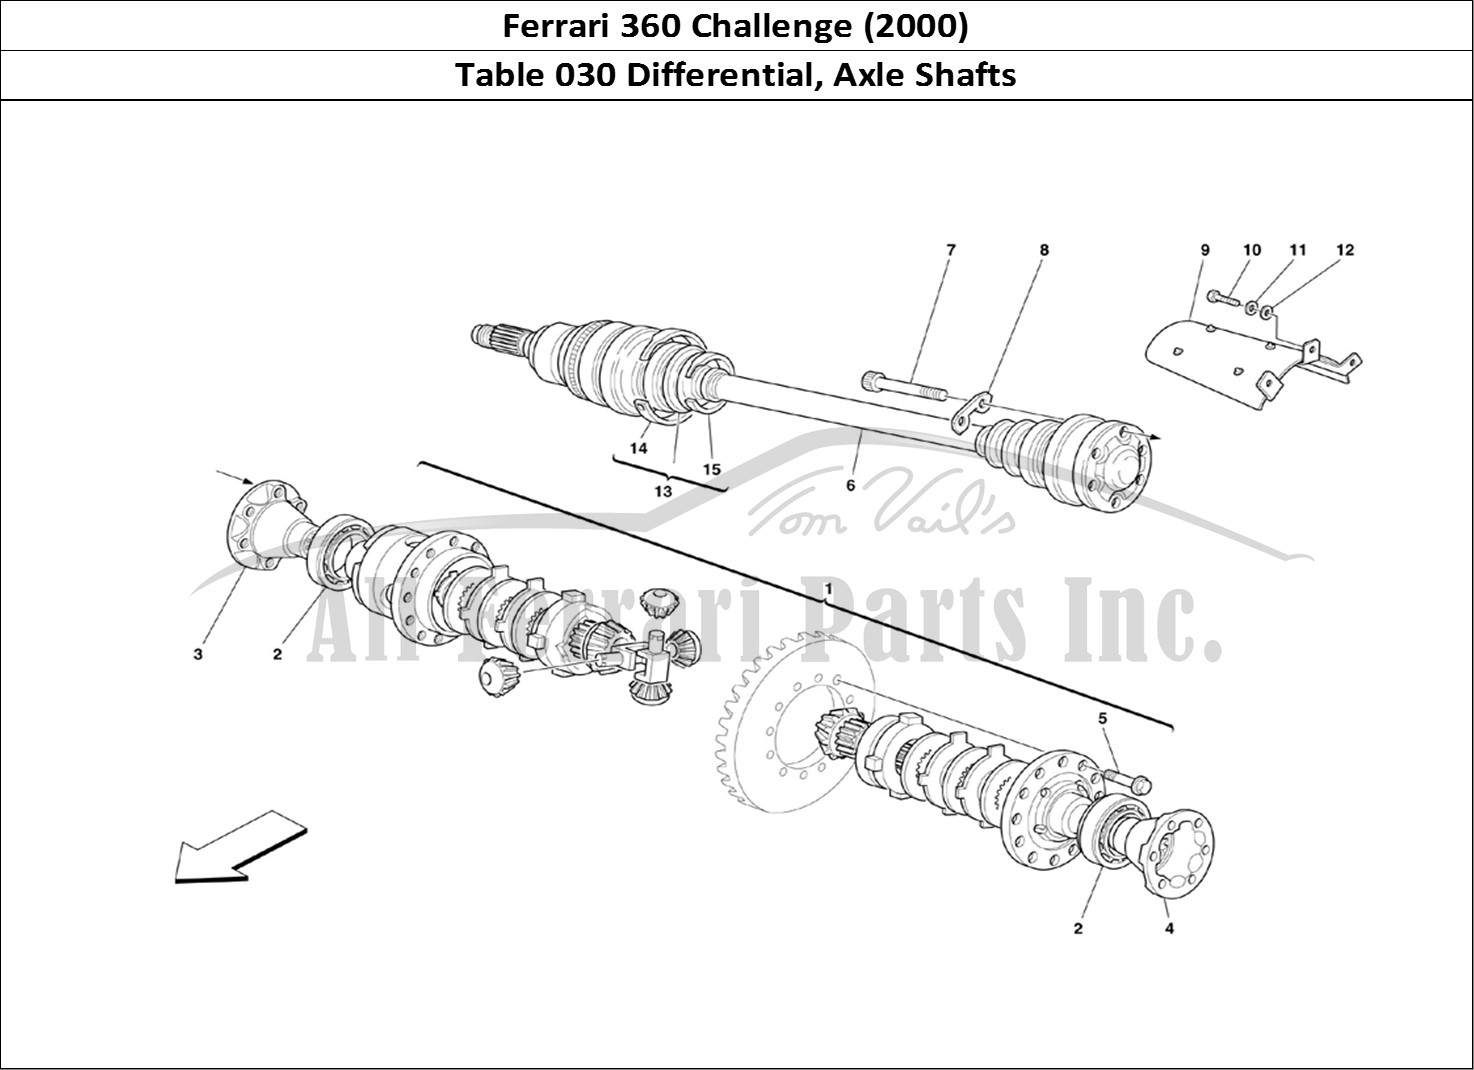 Ferrari Parts Ferrari 360 Challenge (2000) Page 030 Differential & Axle Shaft